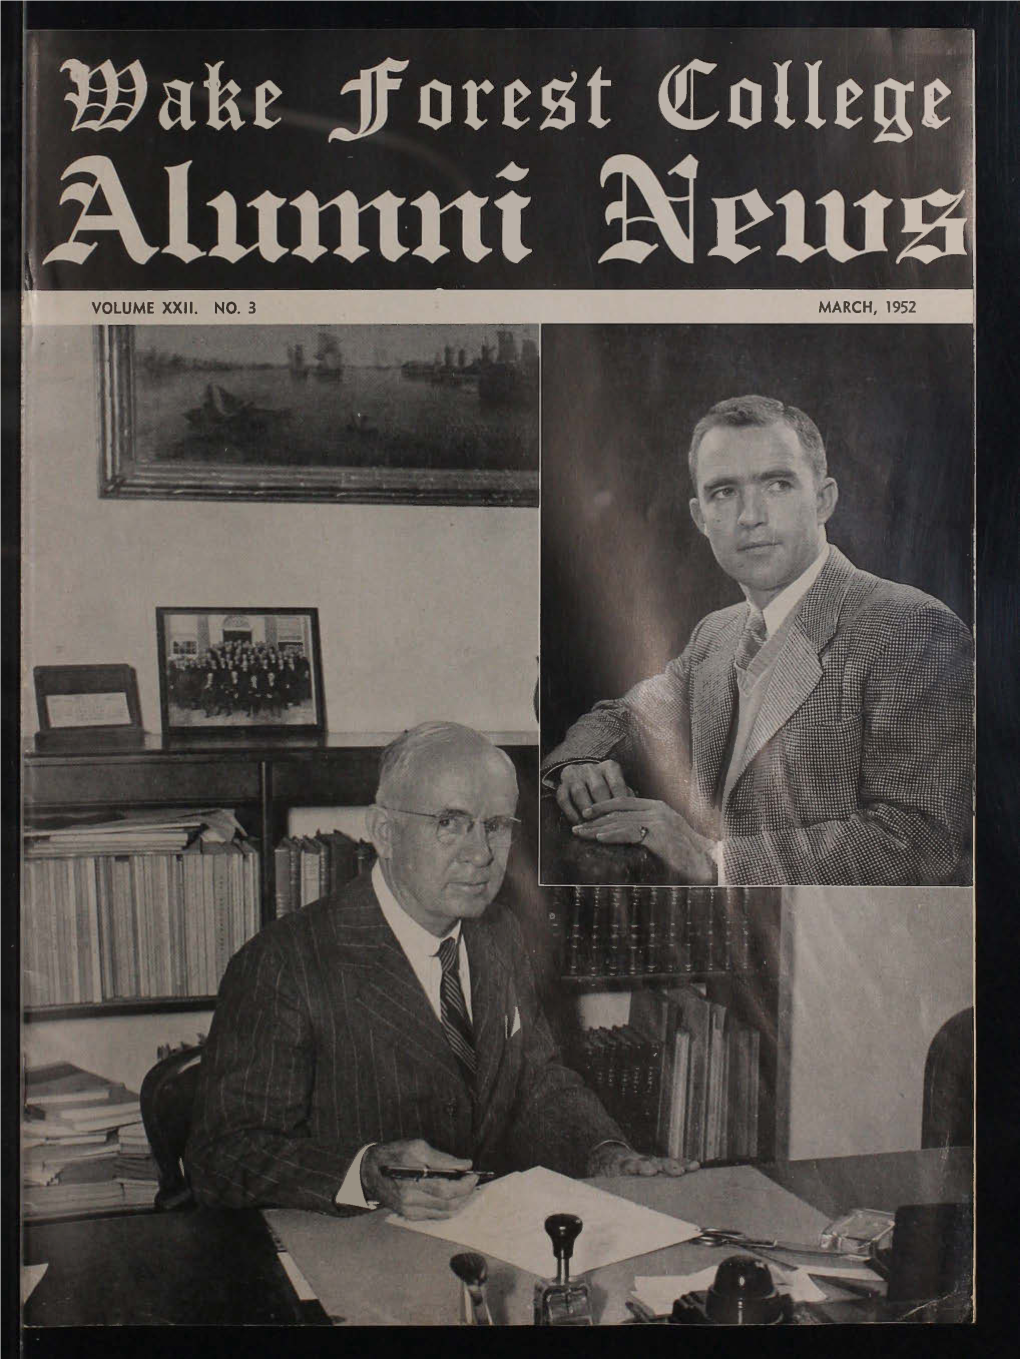 Wake Forest College Alumni News [March 1952]